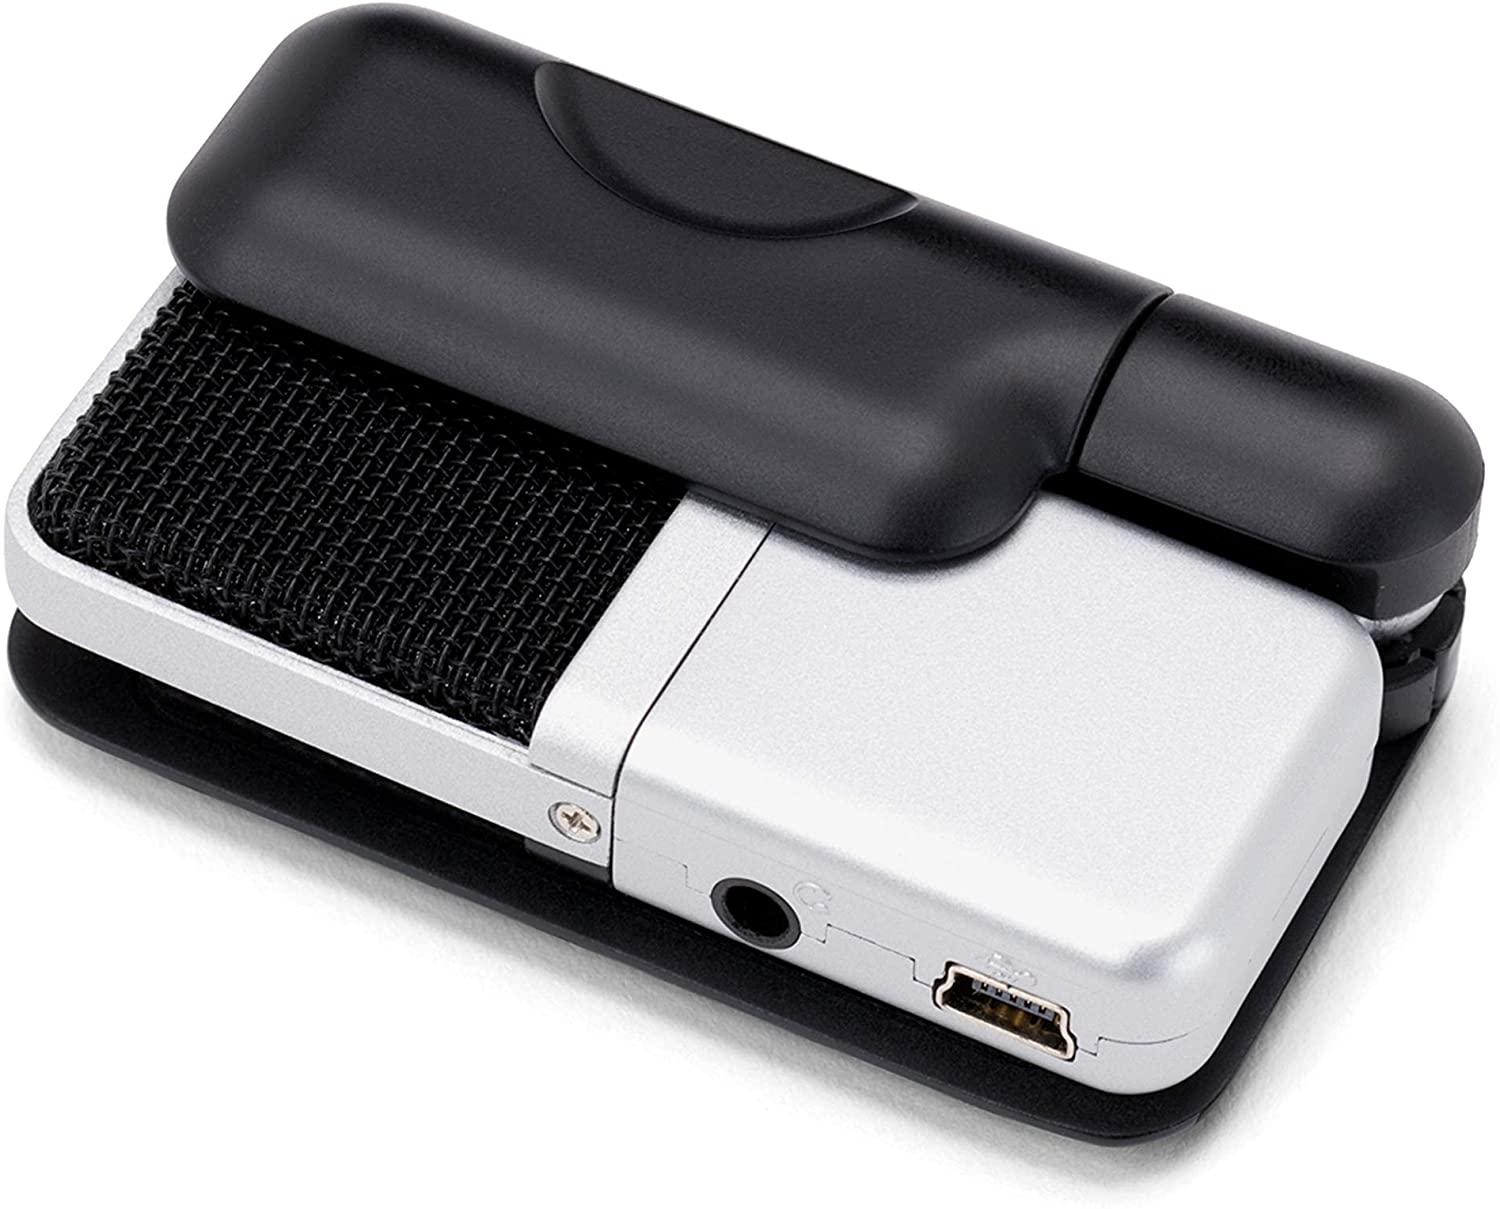 Samson SAGOMIC Go Mic Portable USB Condenser Microphone - Pro-Distributing